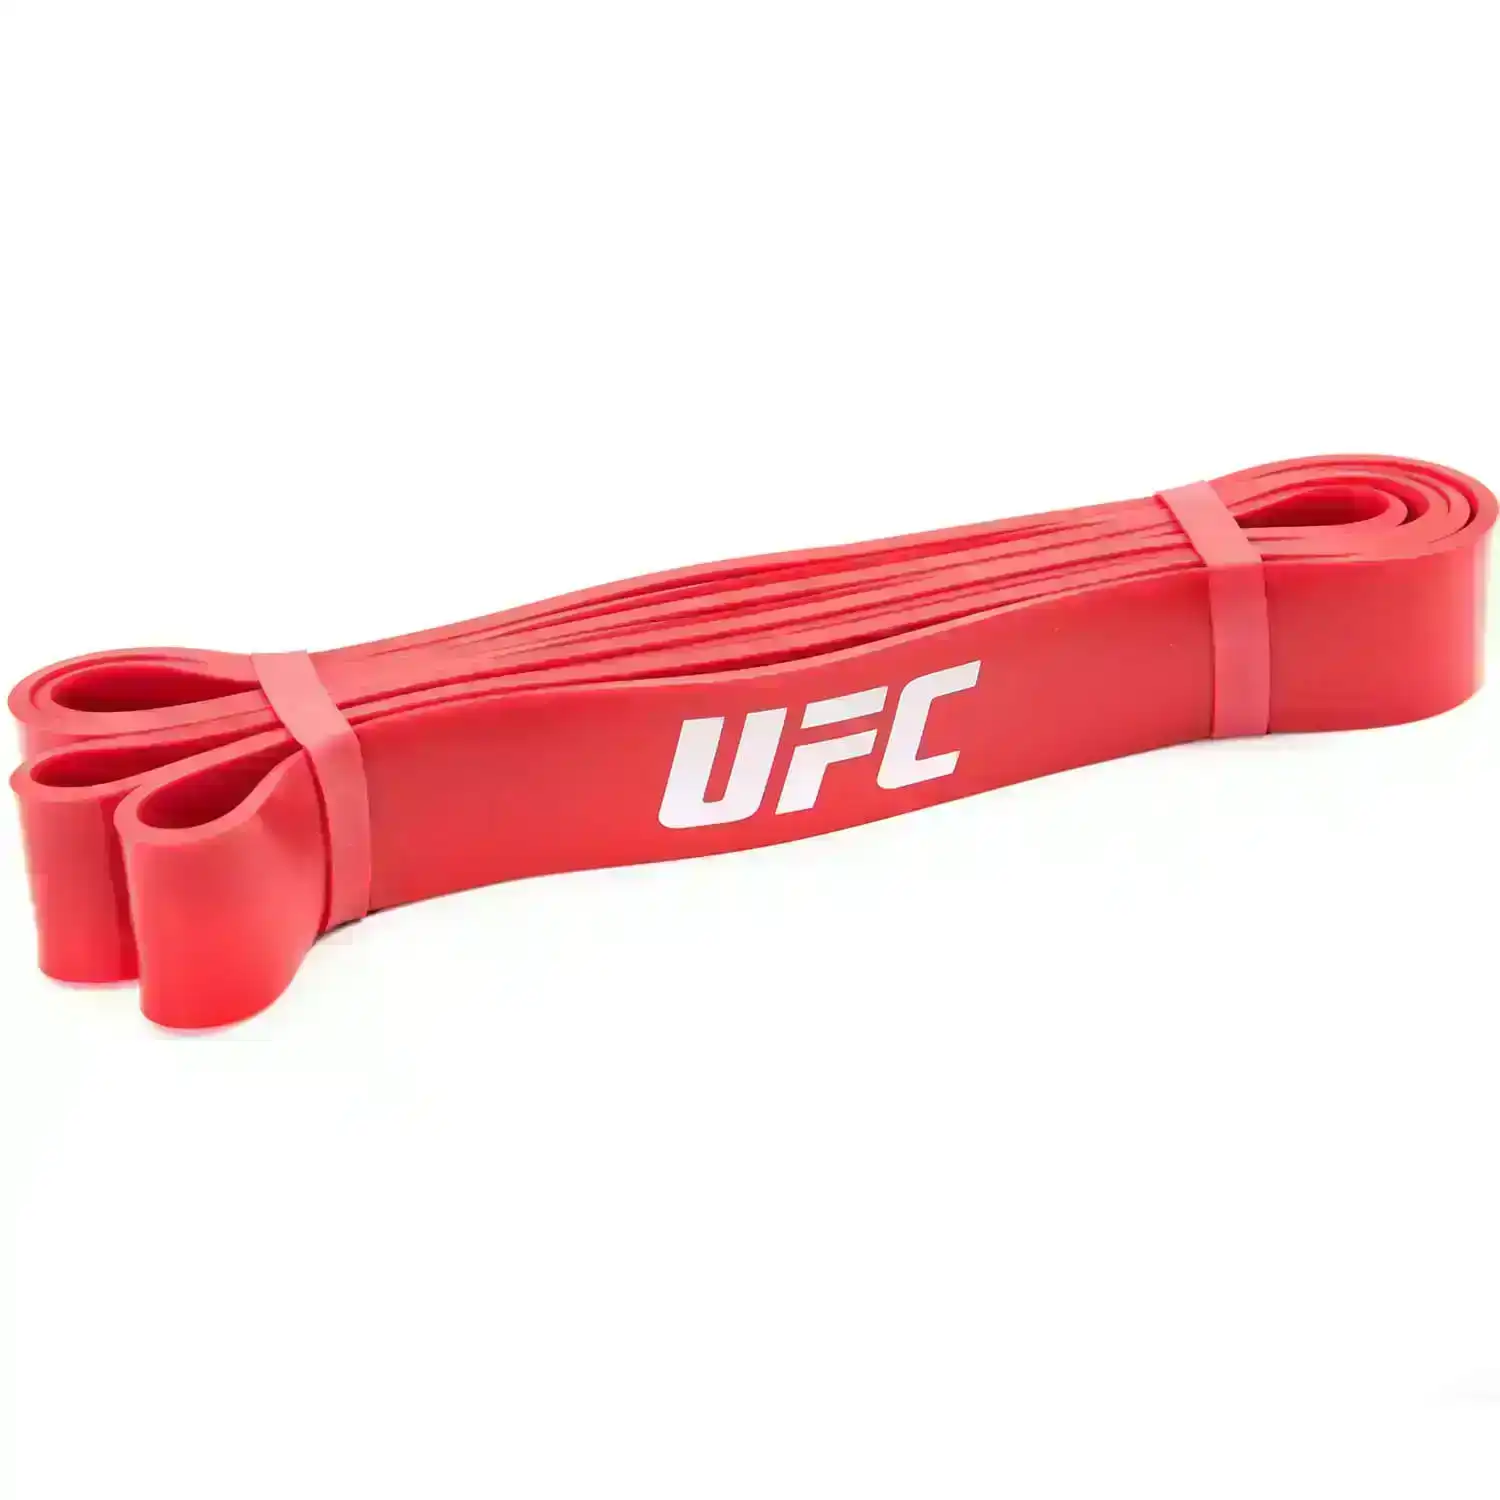 UFC Power Band Medium Red